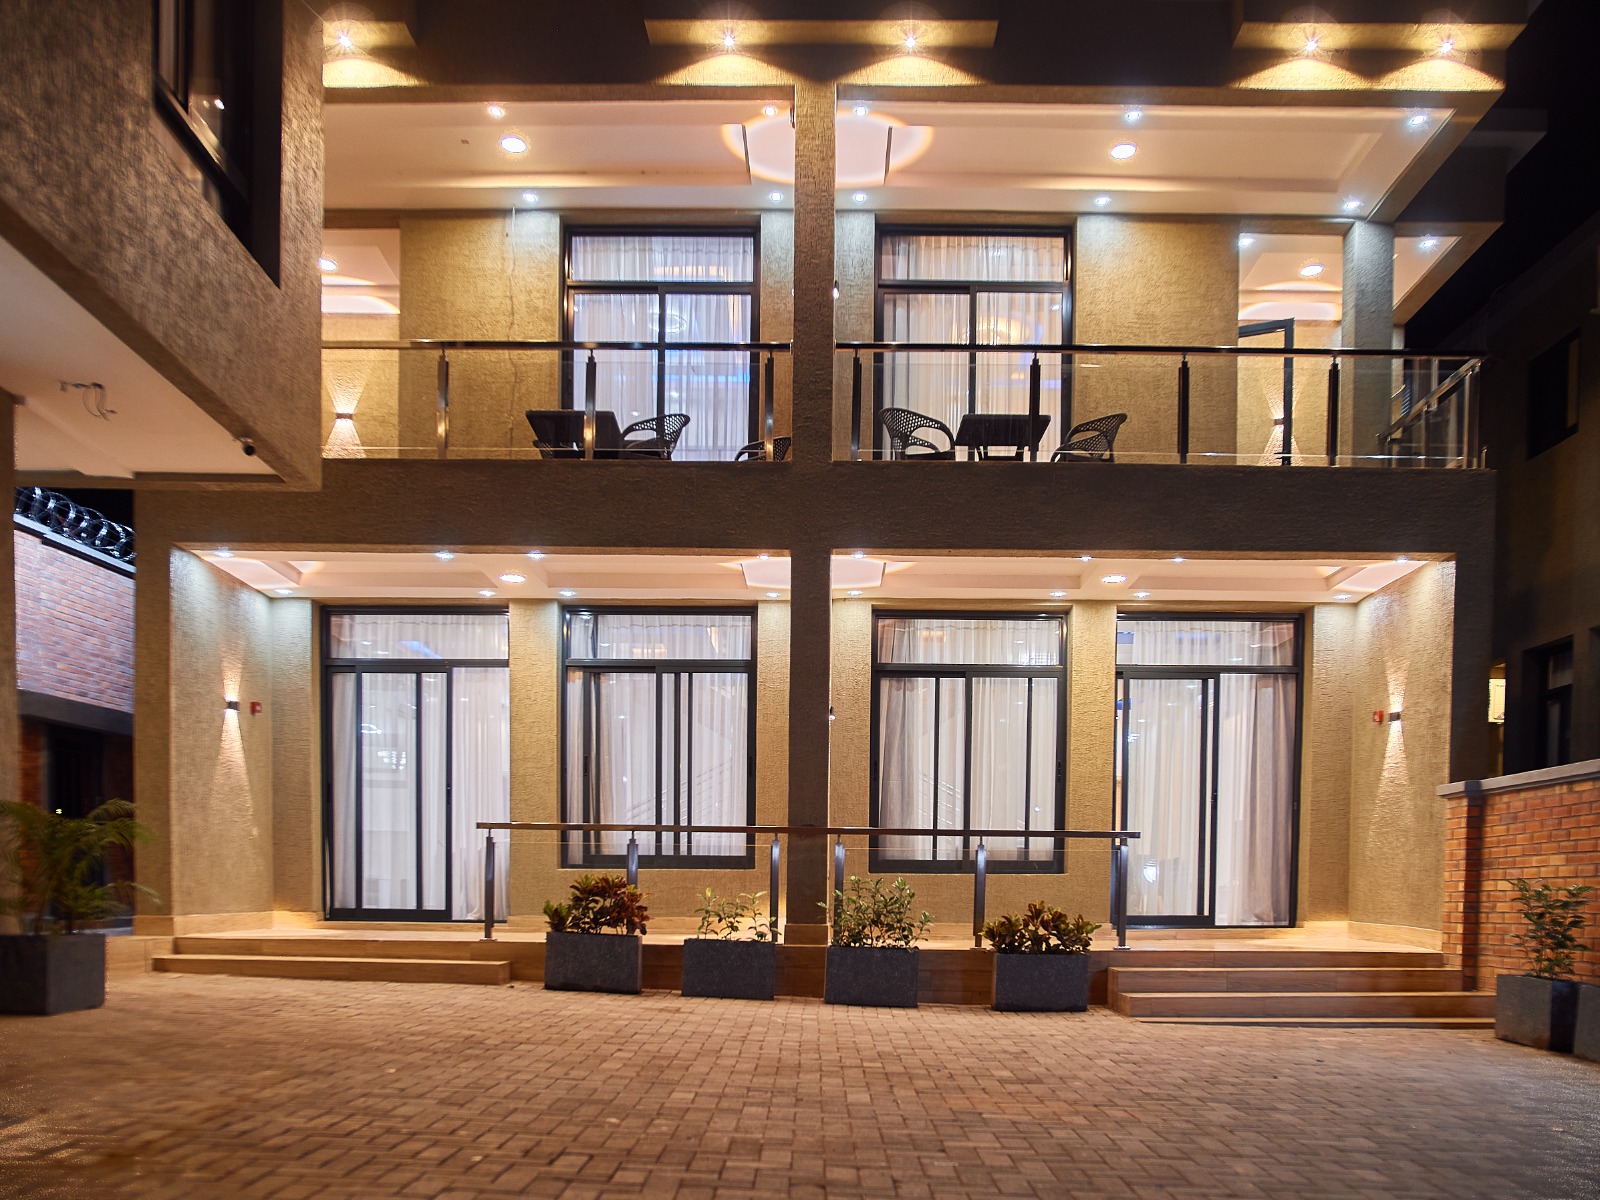 FF105 Nyarutarama new and nice apartment for rent in Kigali Rwanda